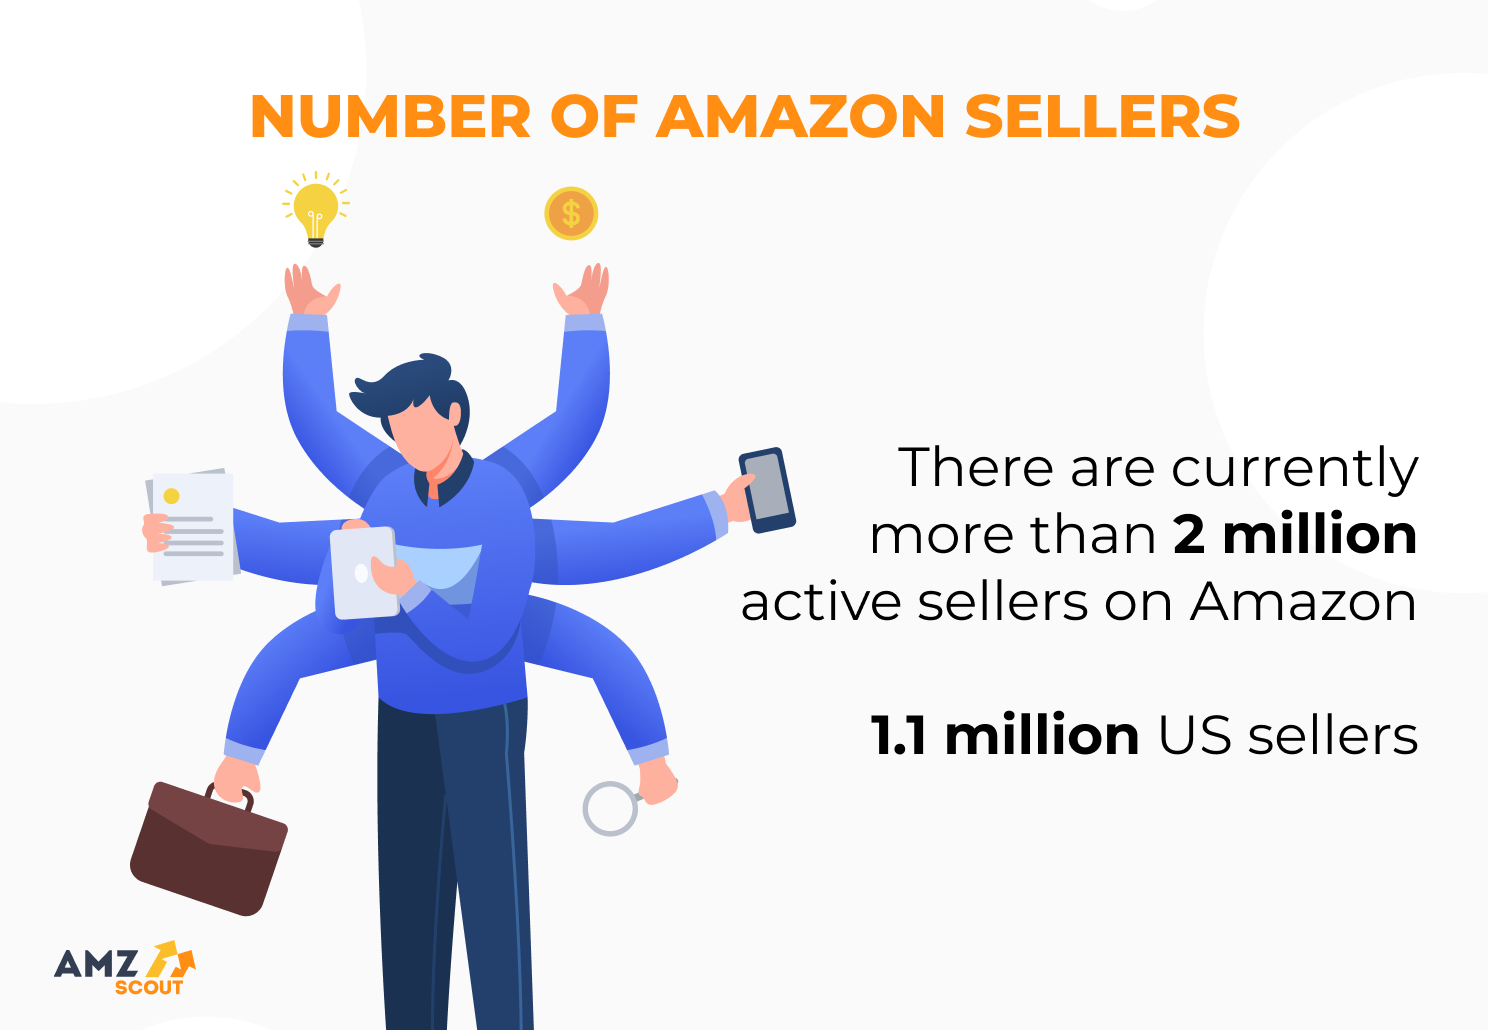 Amazon has over 2 million sellers according to statistics